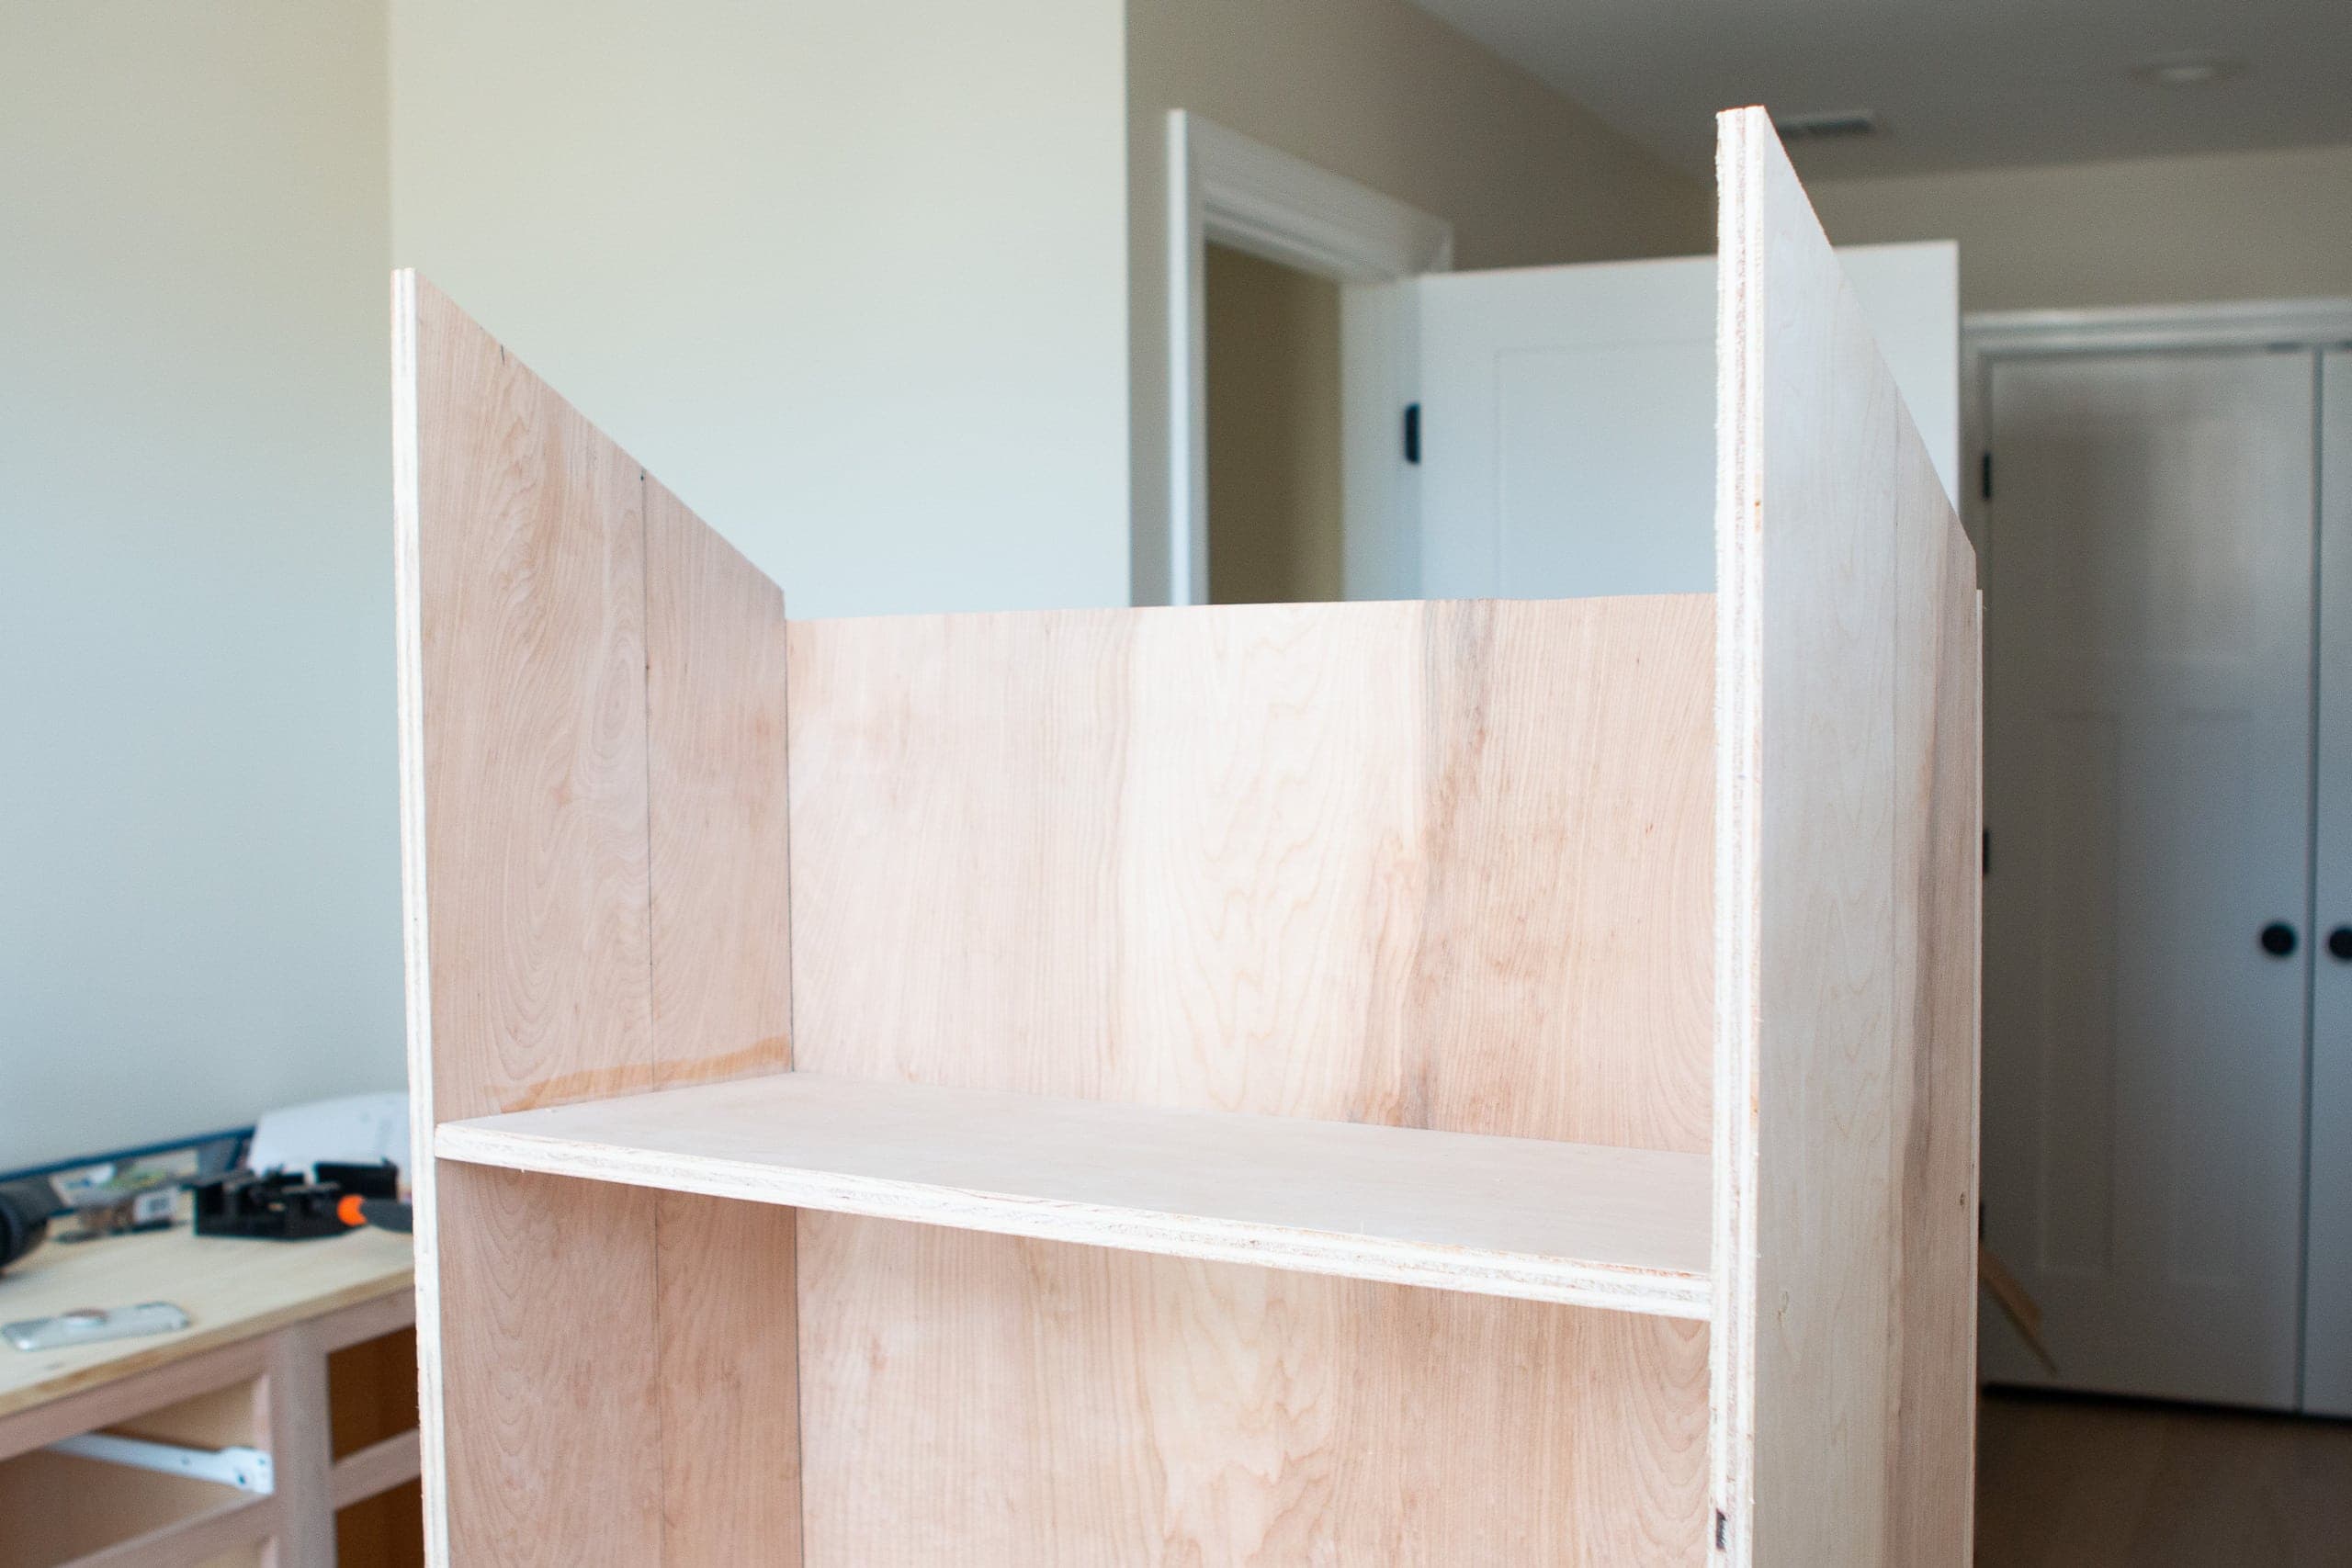 How to make DIY bookshelves